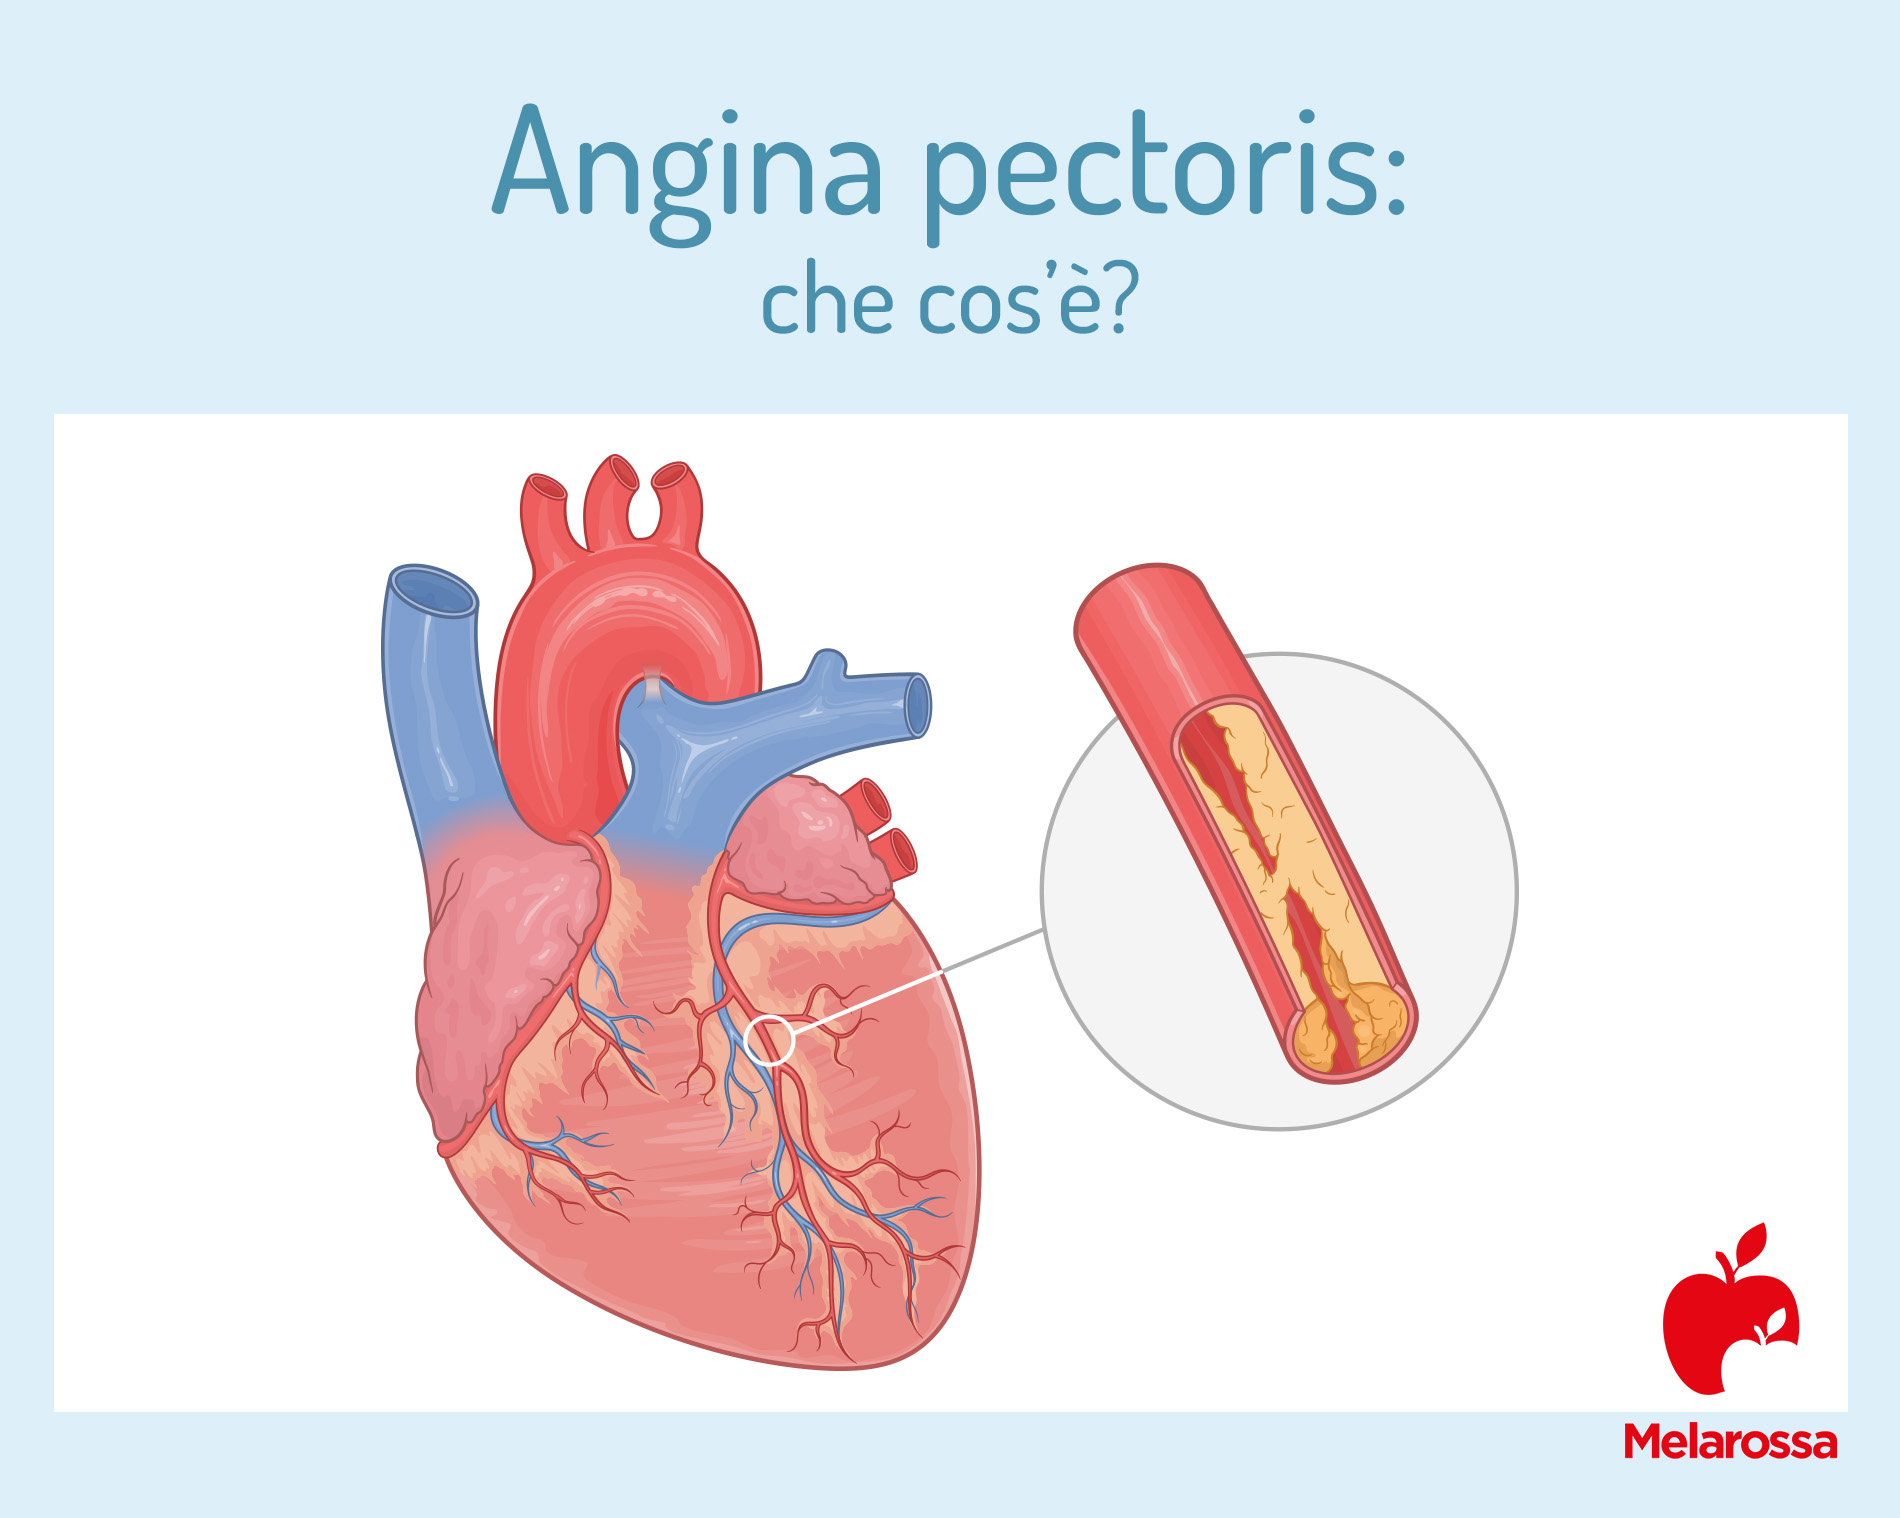 angina pectoris: che cos'è